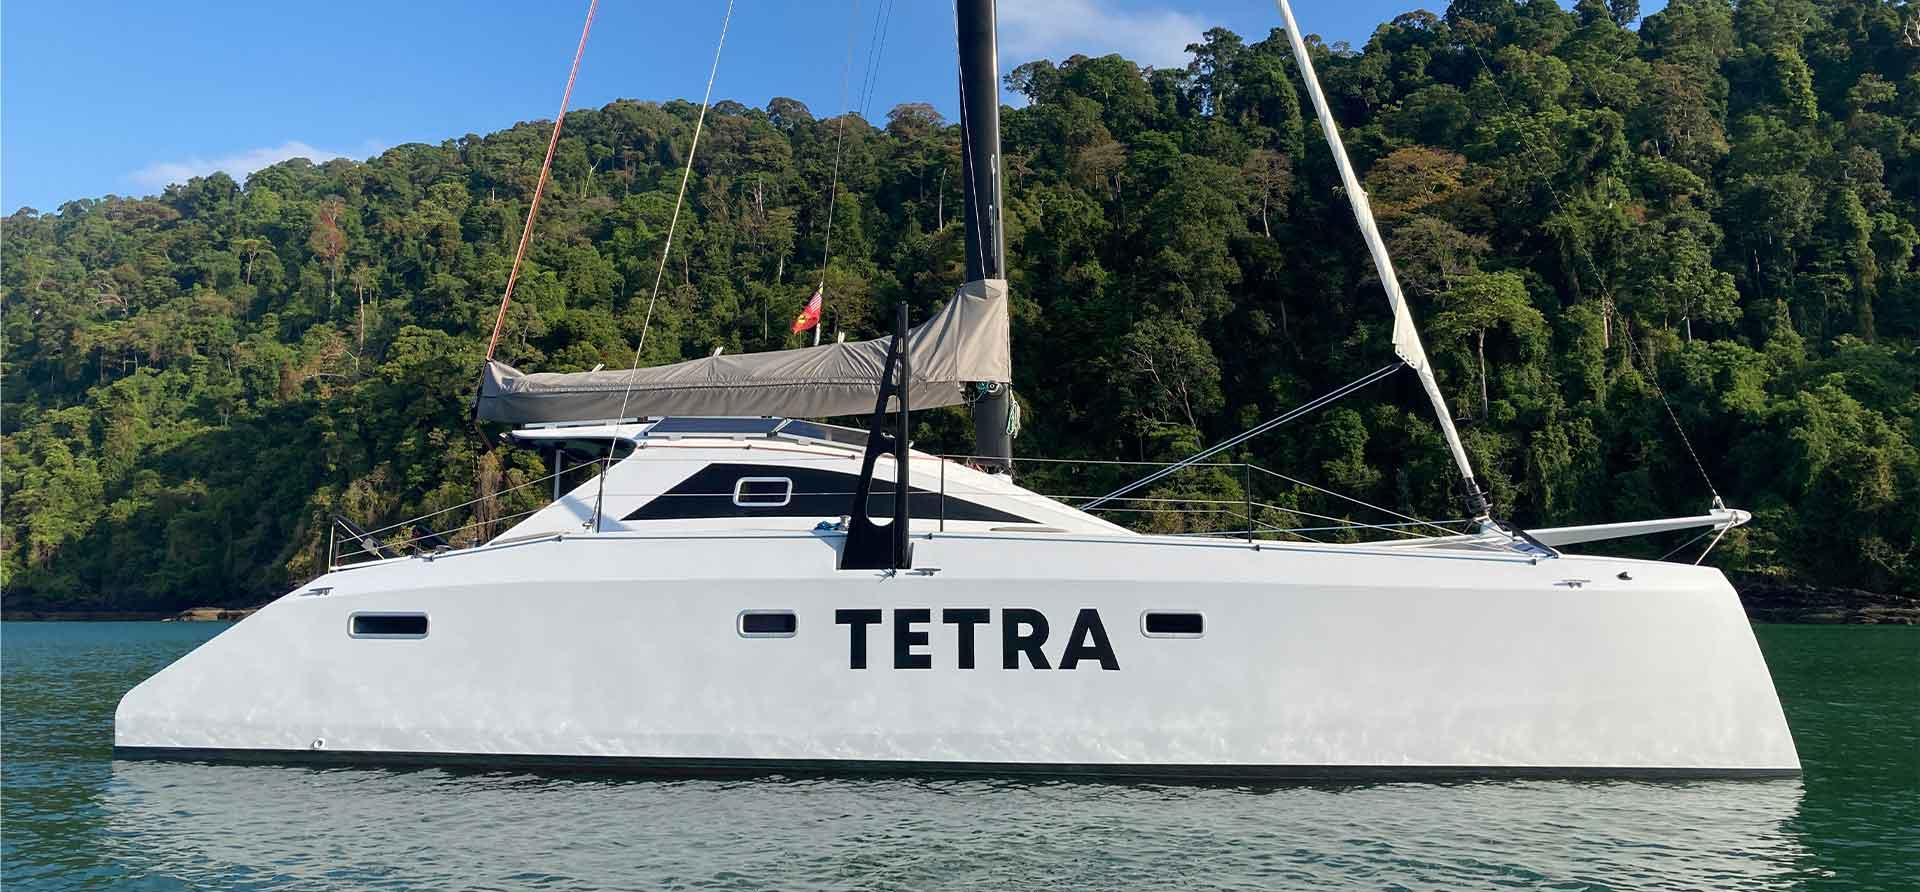 Tetra Yacht Photos Pics 